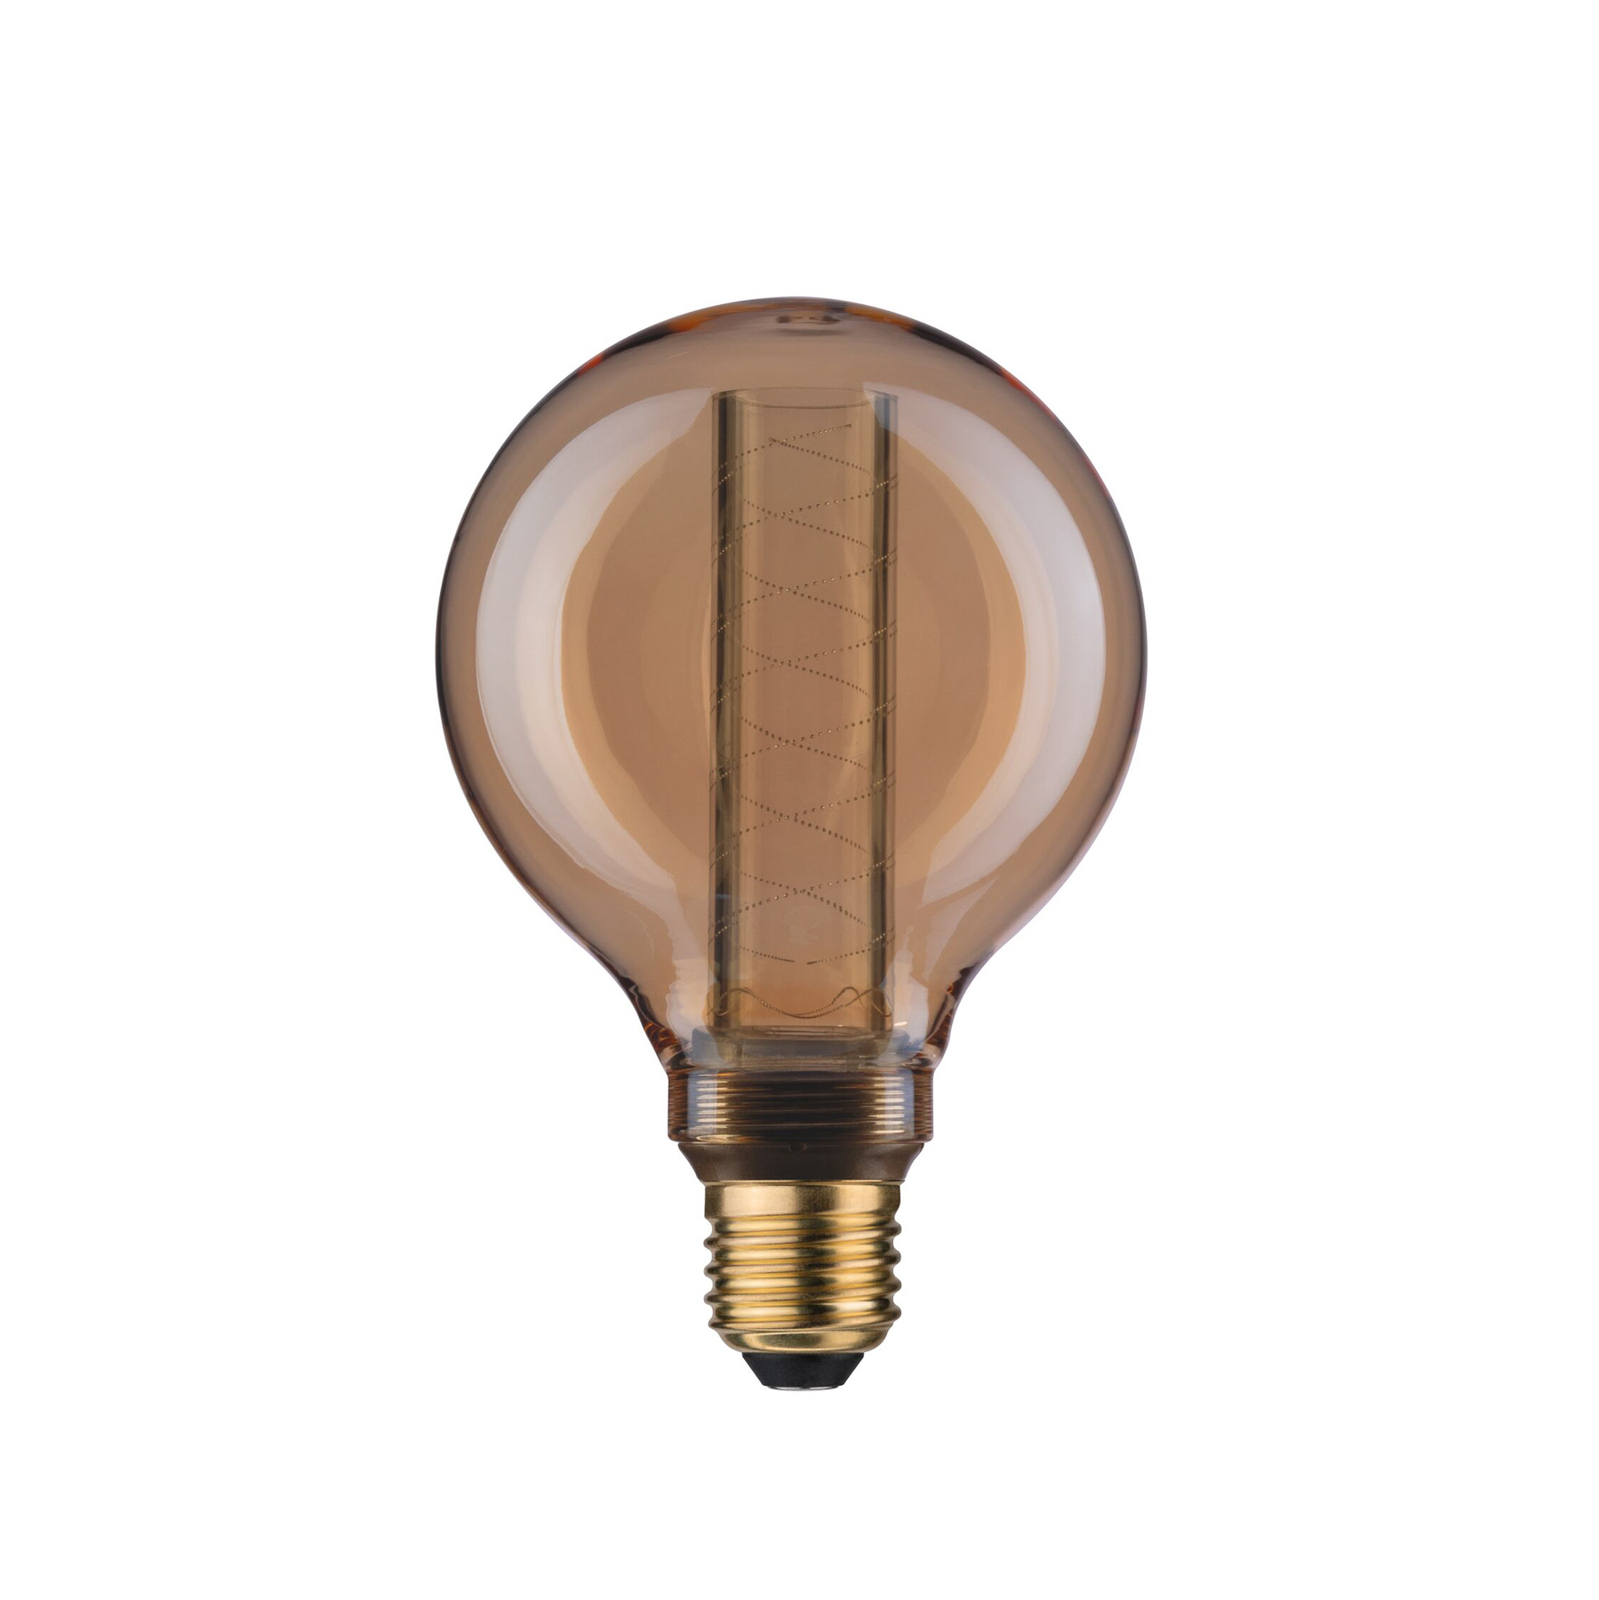 LED globe bulb E27 4W G95 Inner Glow spiral pattern